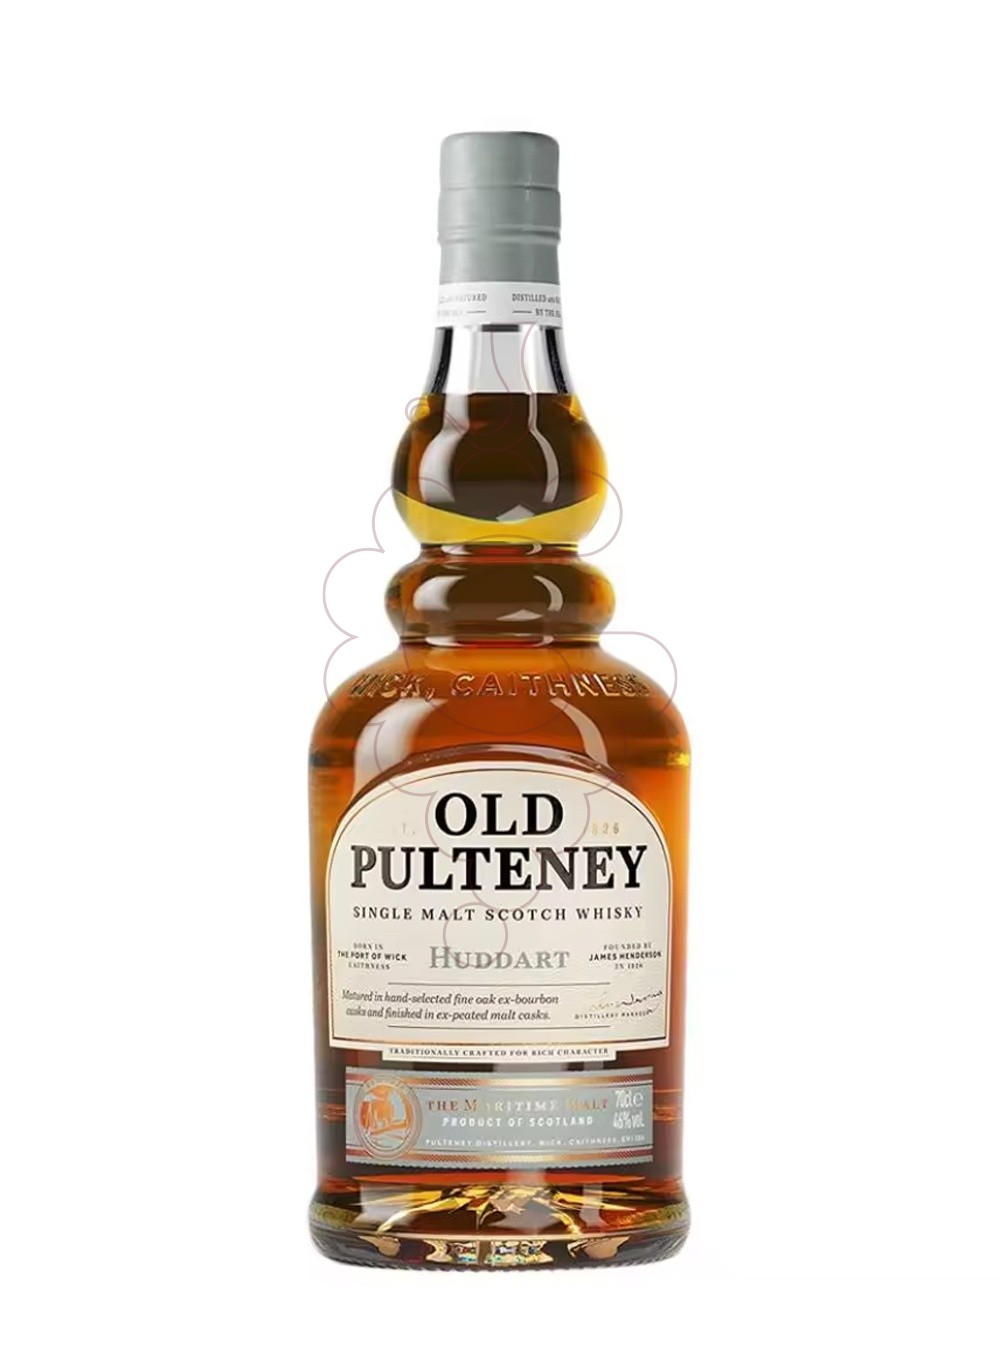 Foto Whisky Old pulteney huddart 70 cl